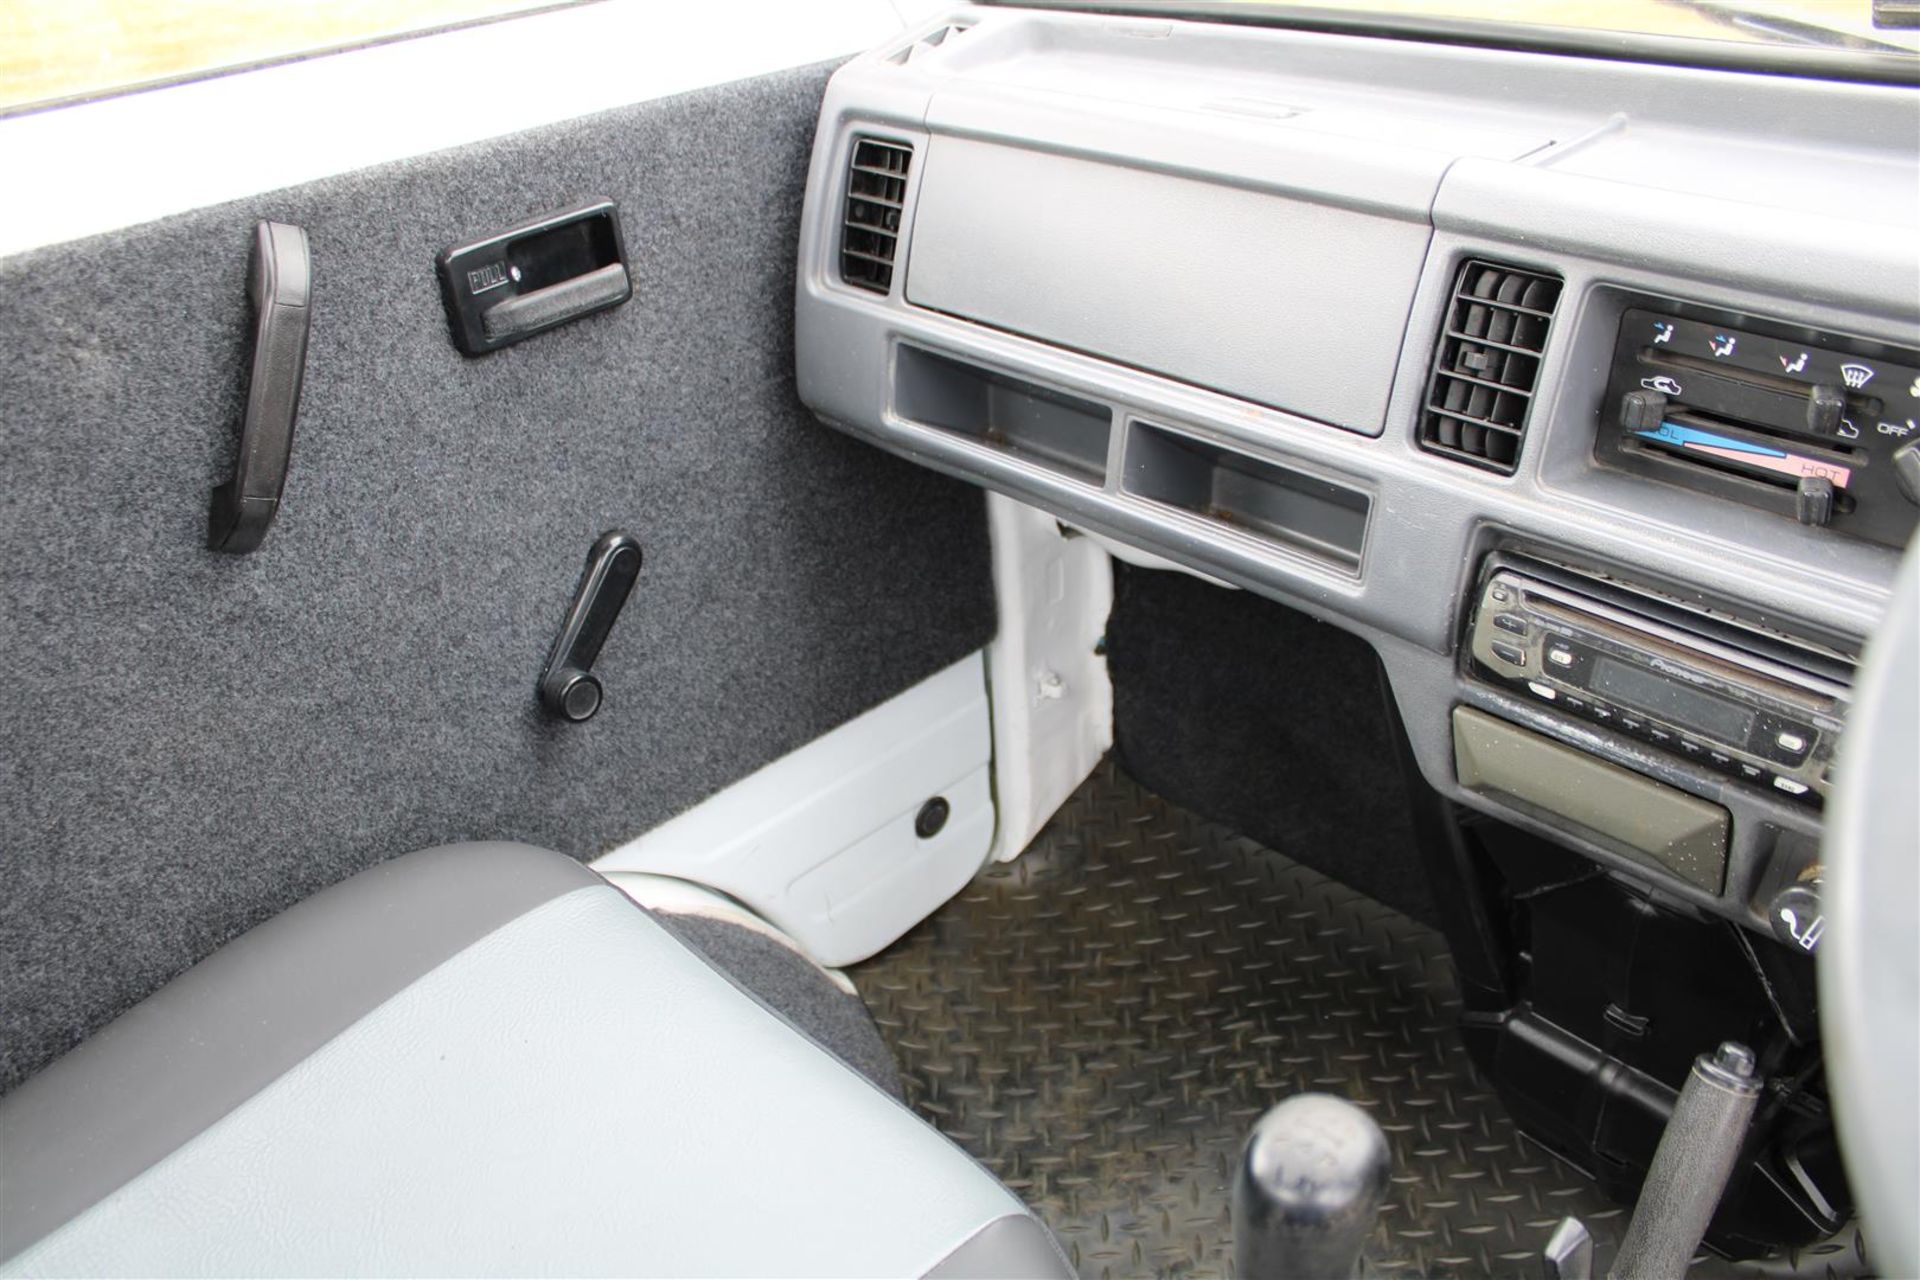 1992 Vauxhall Rascal Pick-Up - Image 9 of 27